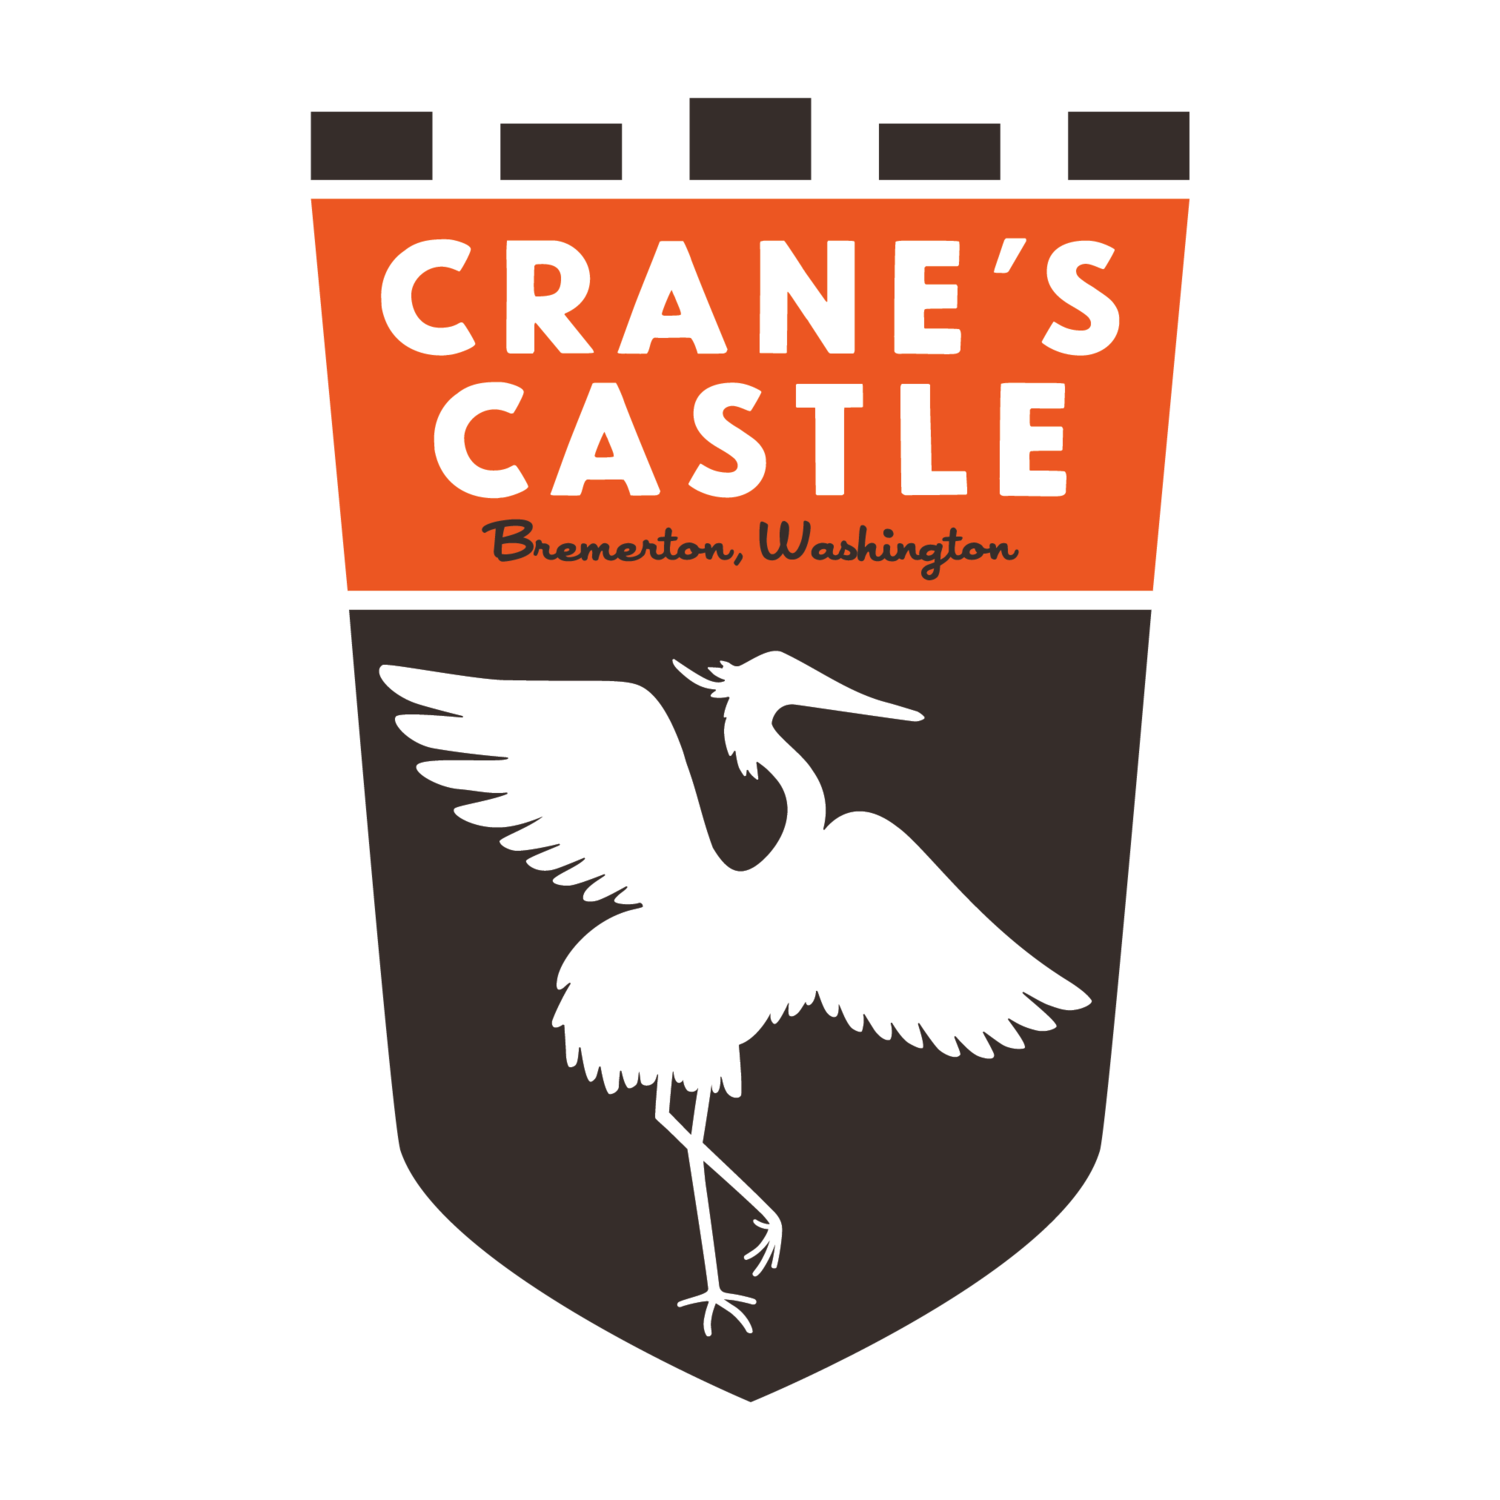 CRANE'S CASTLE BREWING